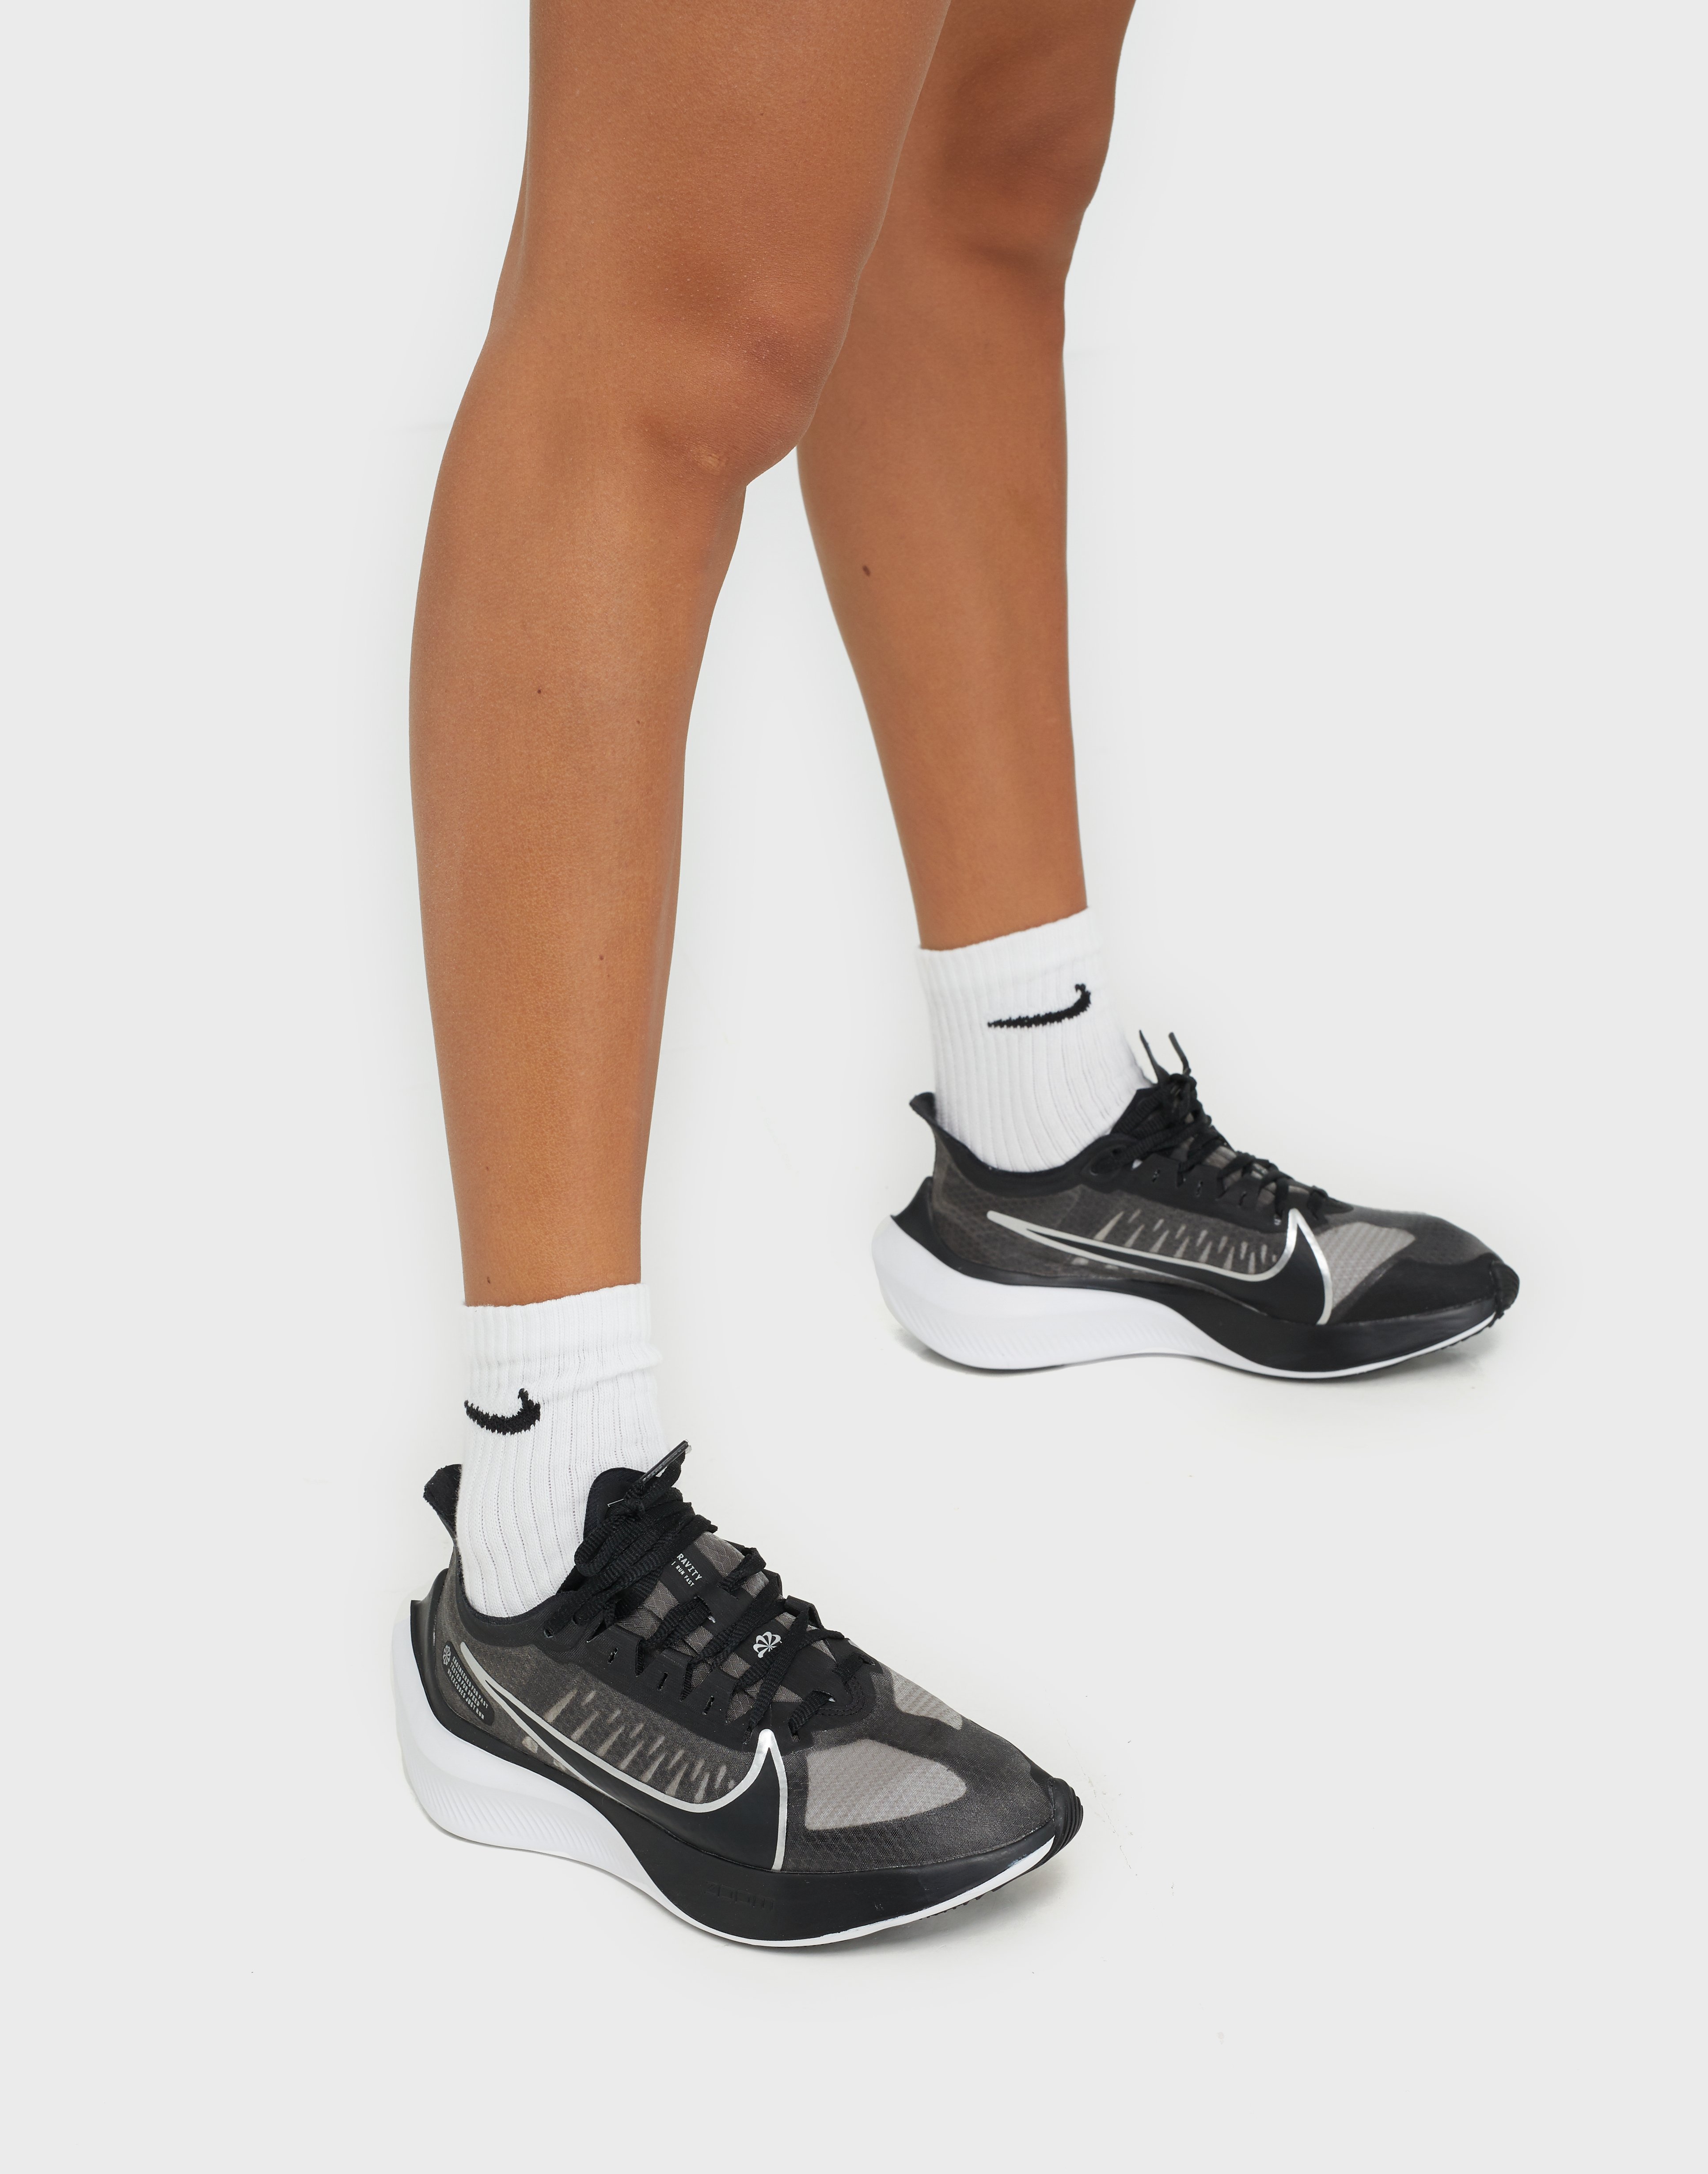 Nike Zoom Gravity - Black/grey - Nelly.com